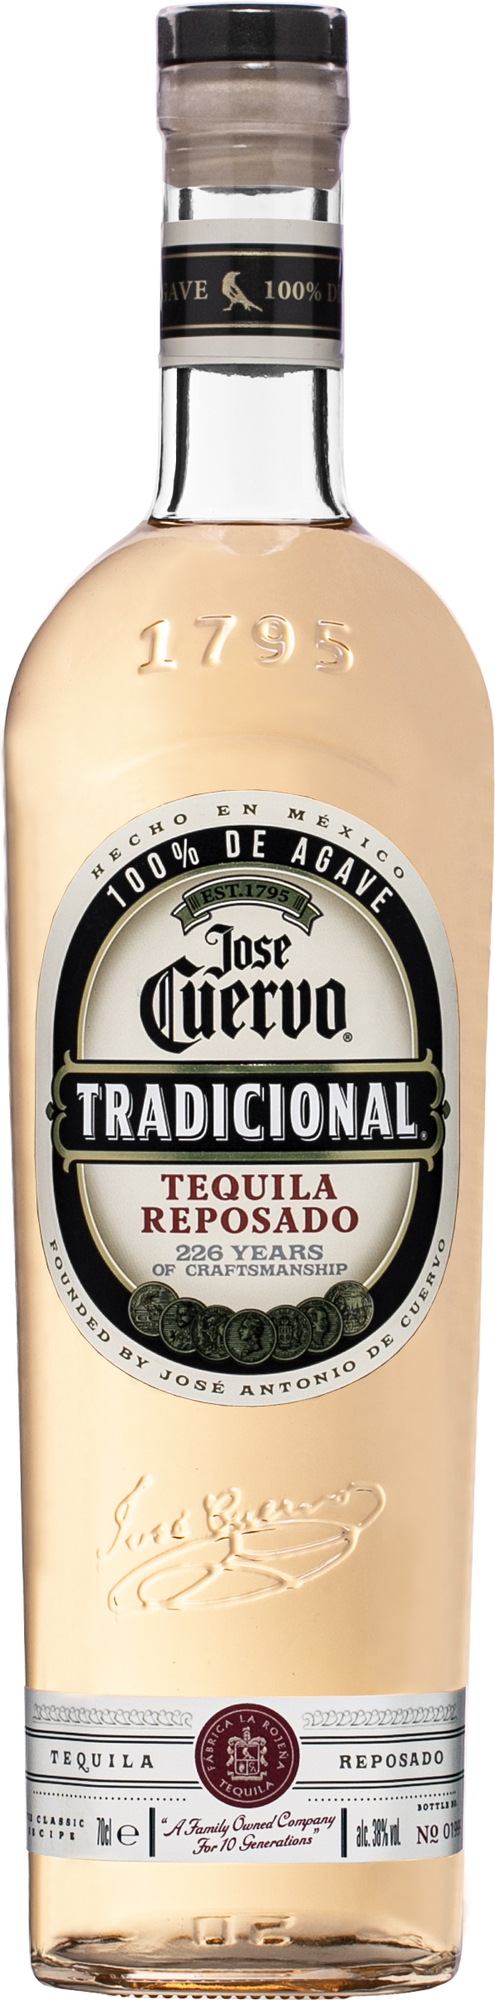 Jose Cuervo Tradicional Reposado 38% 0,7l